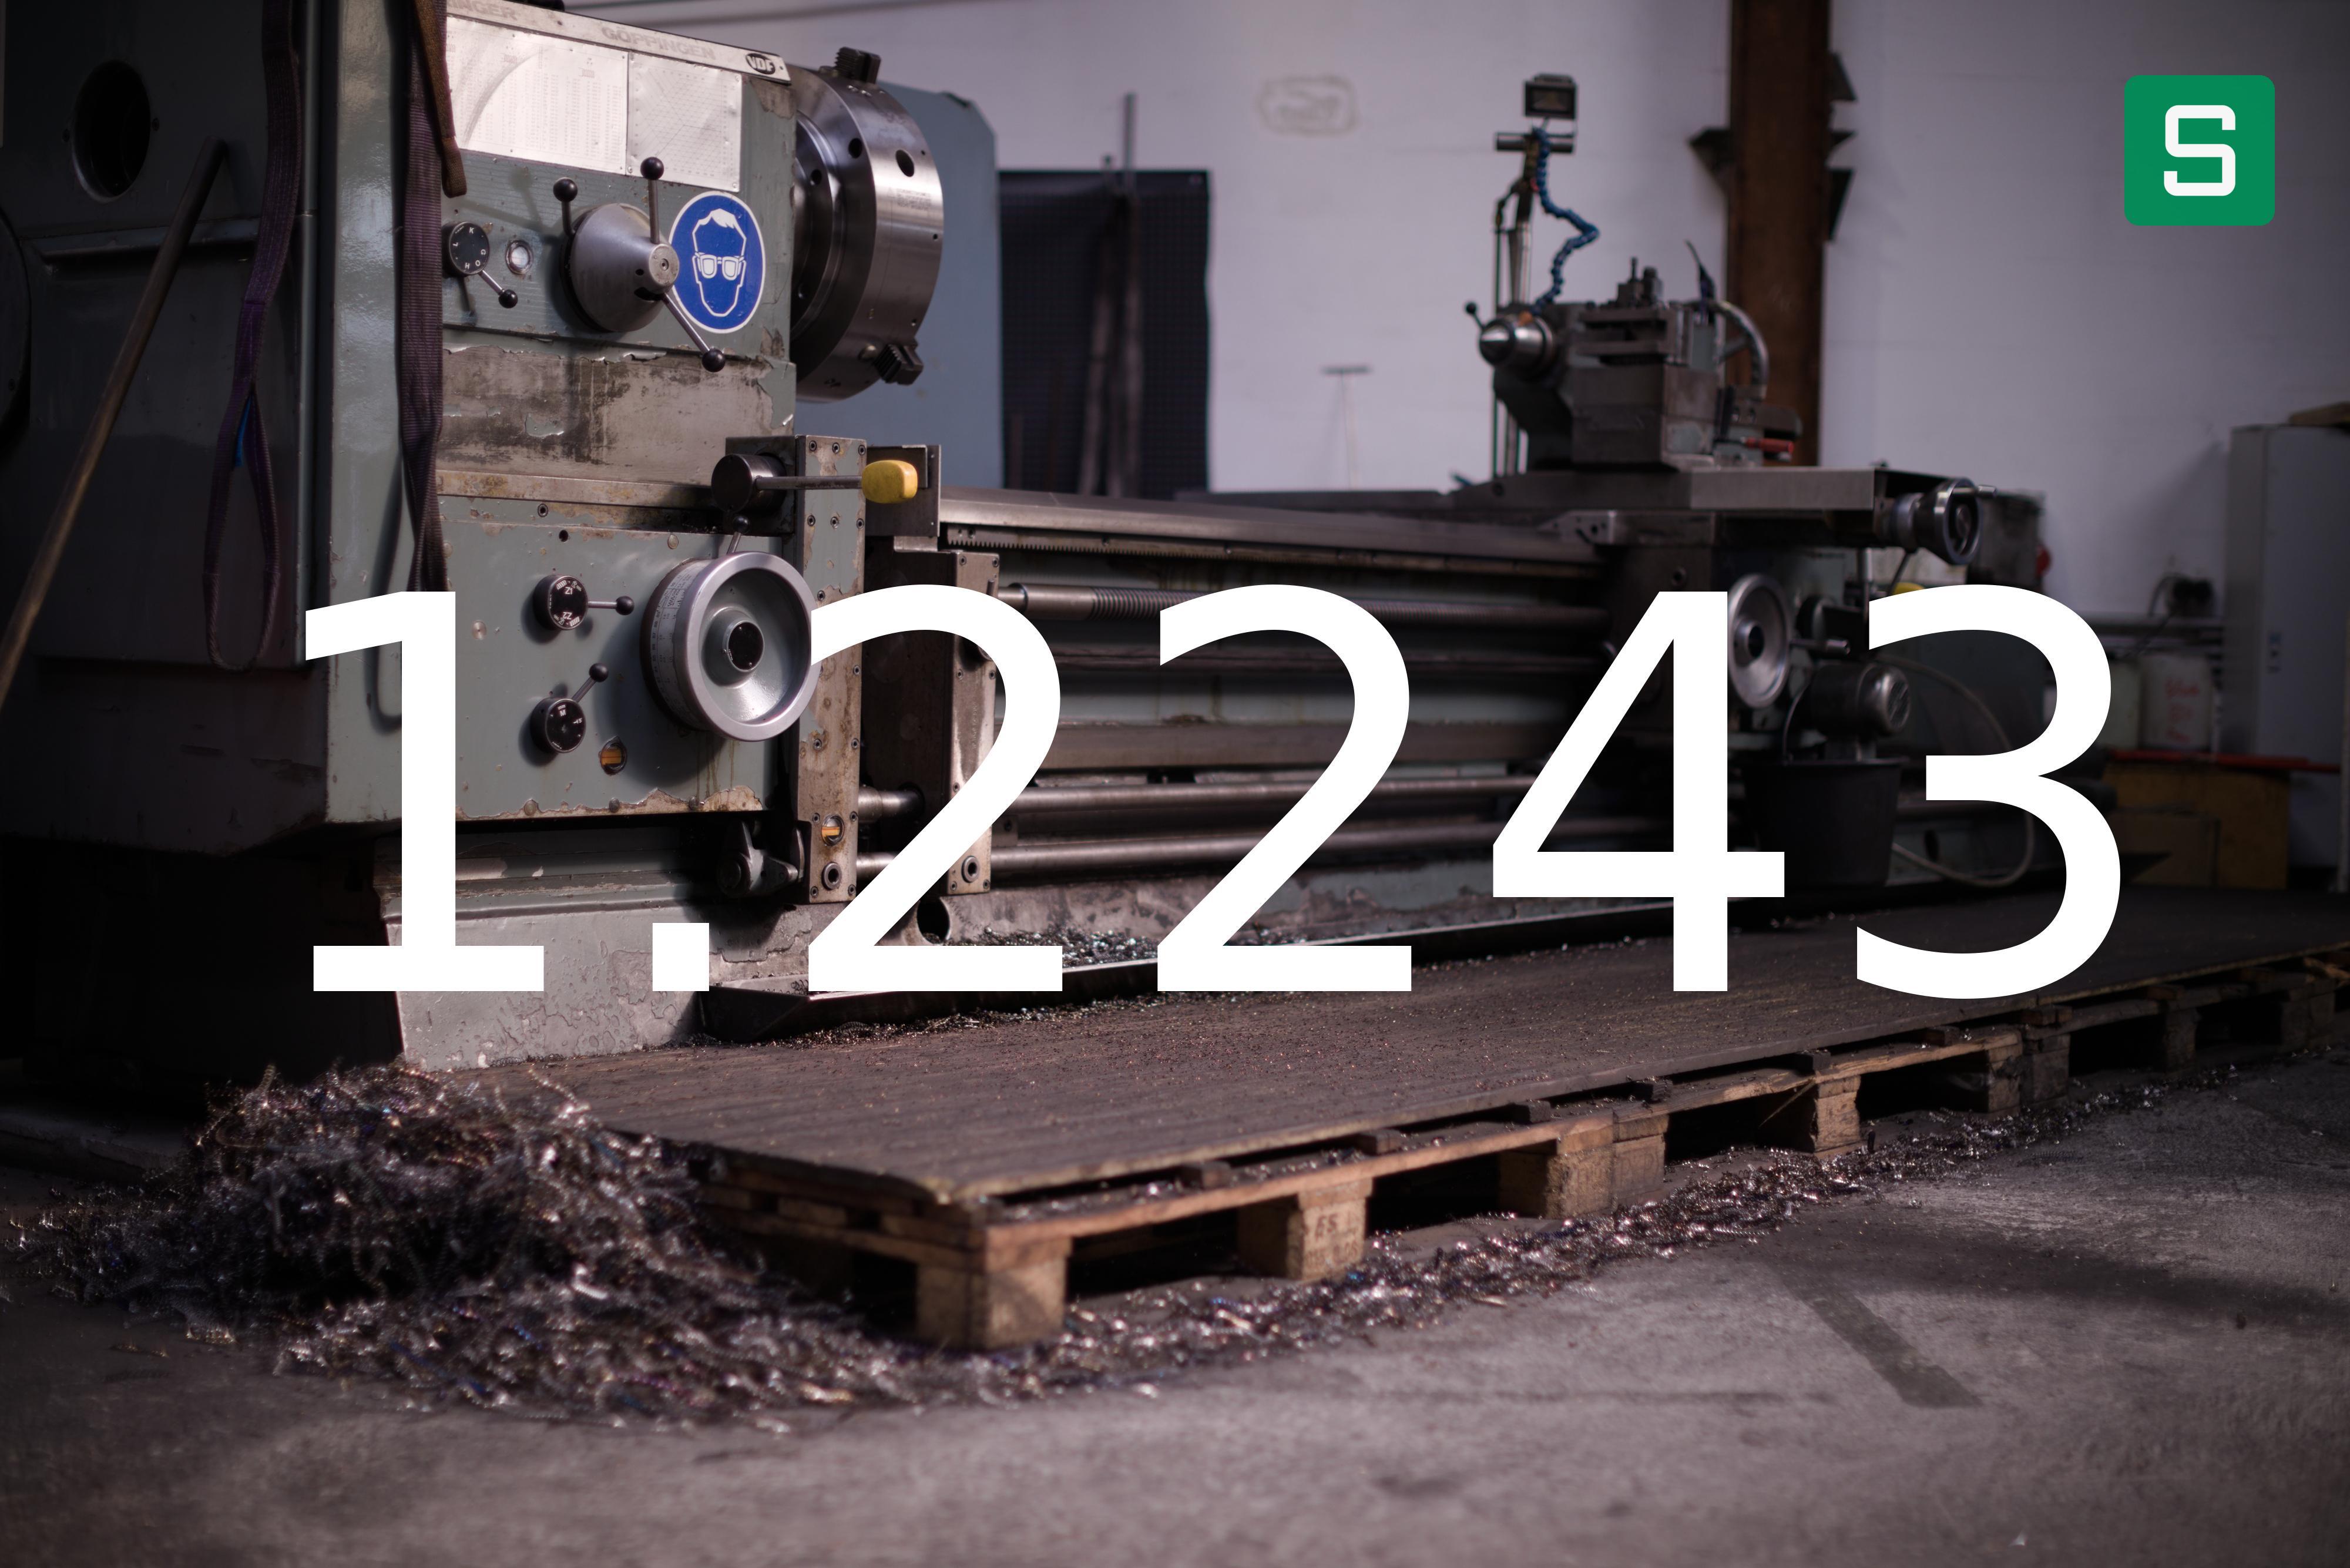 Steel Material: 1.2243